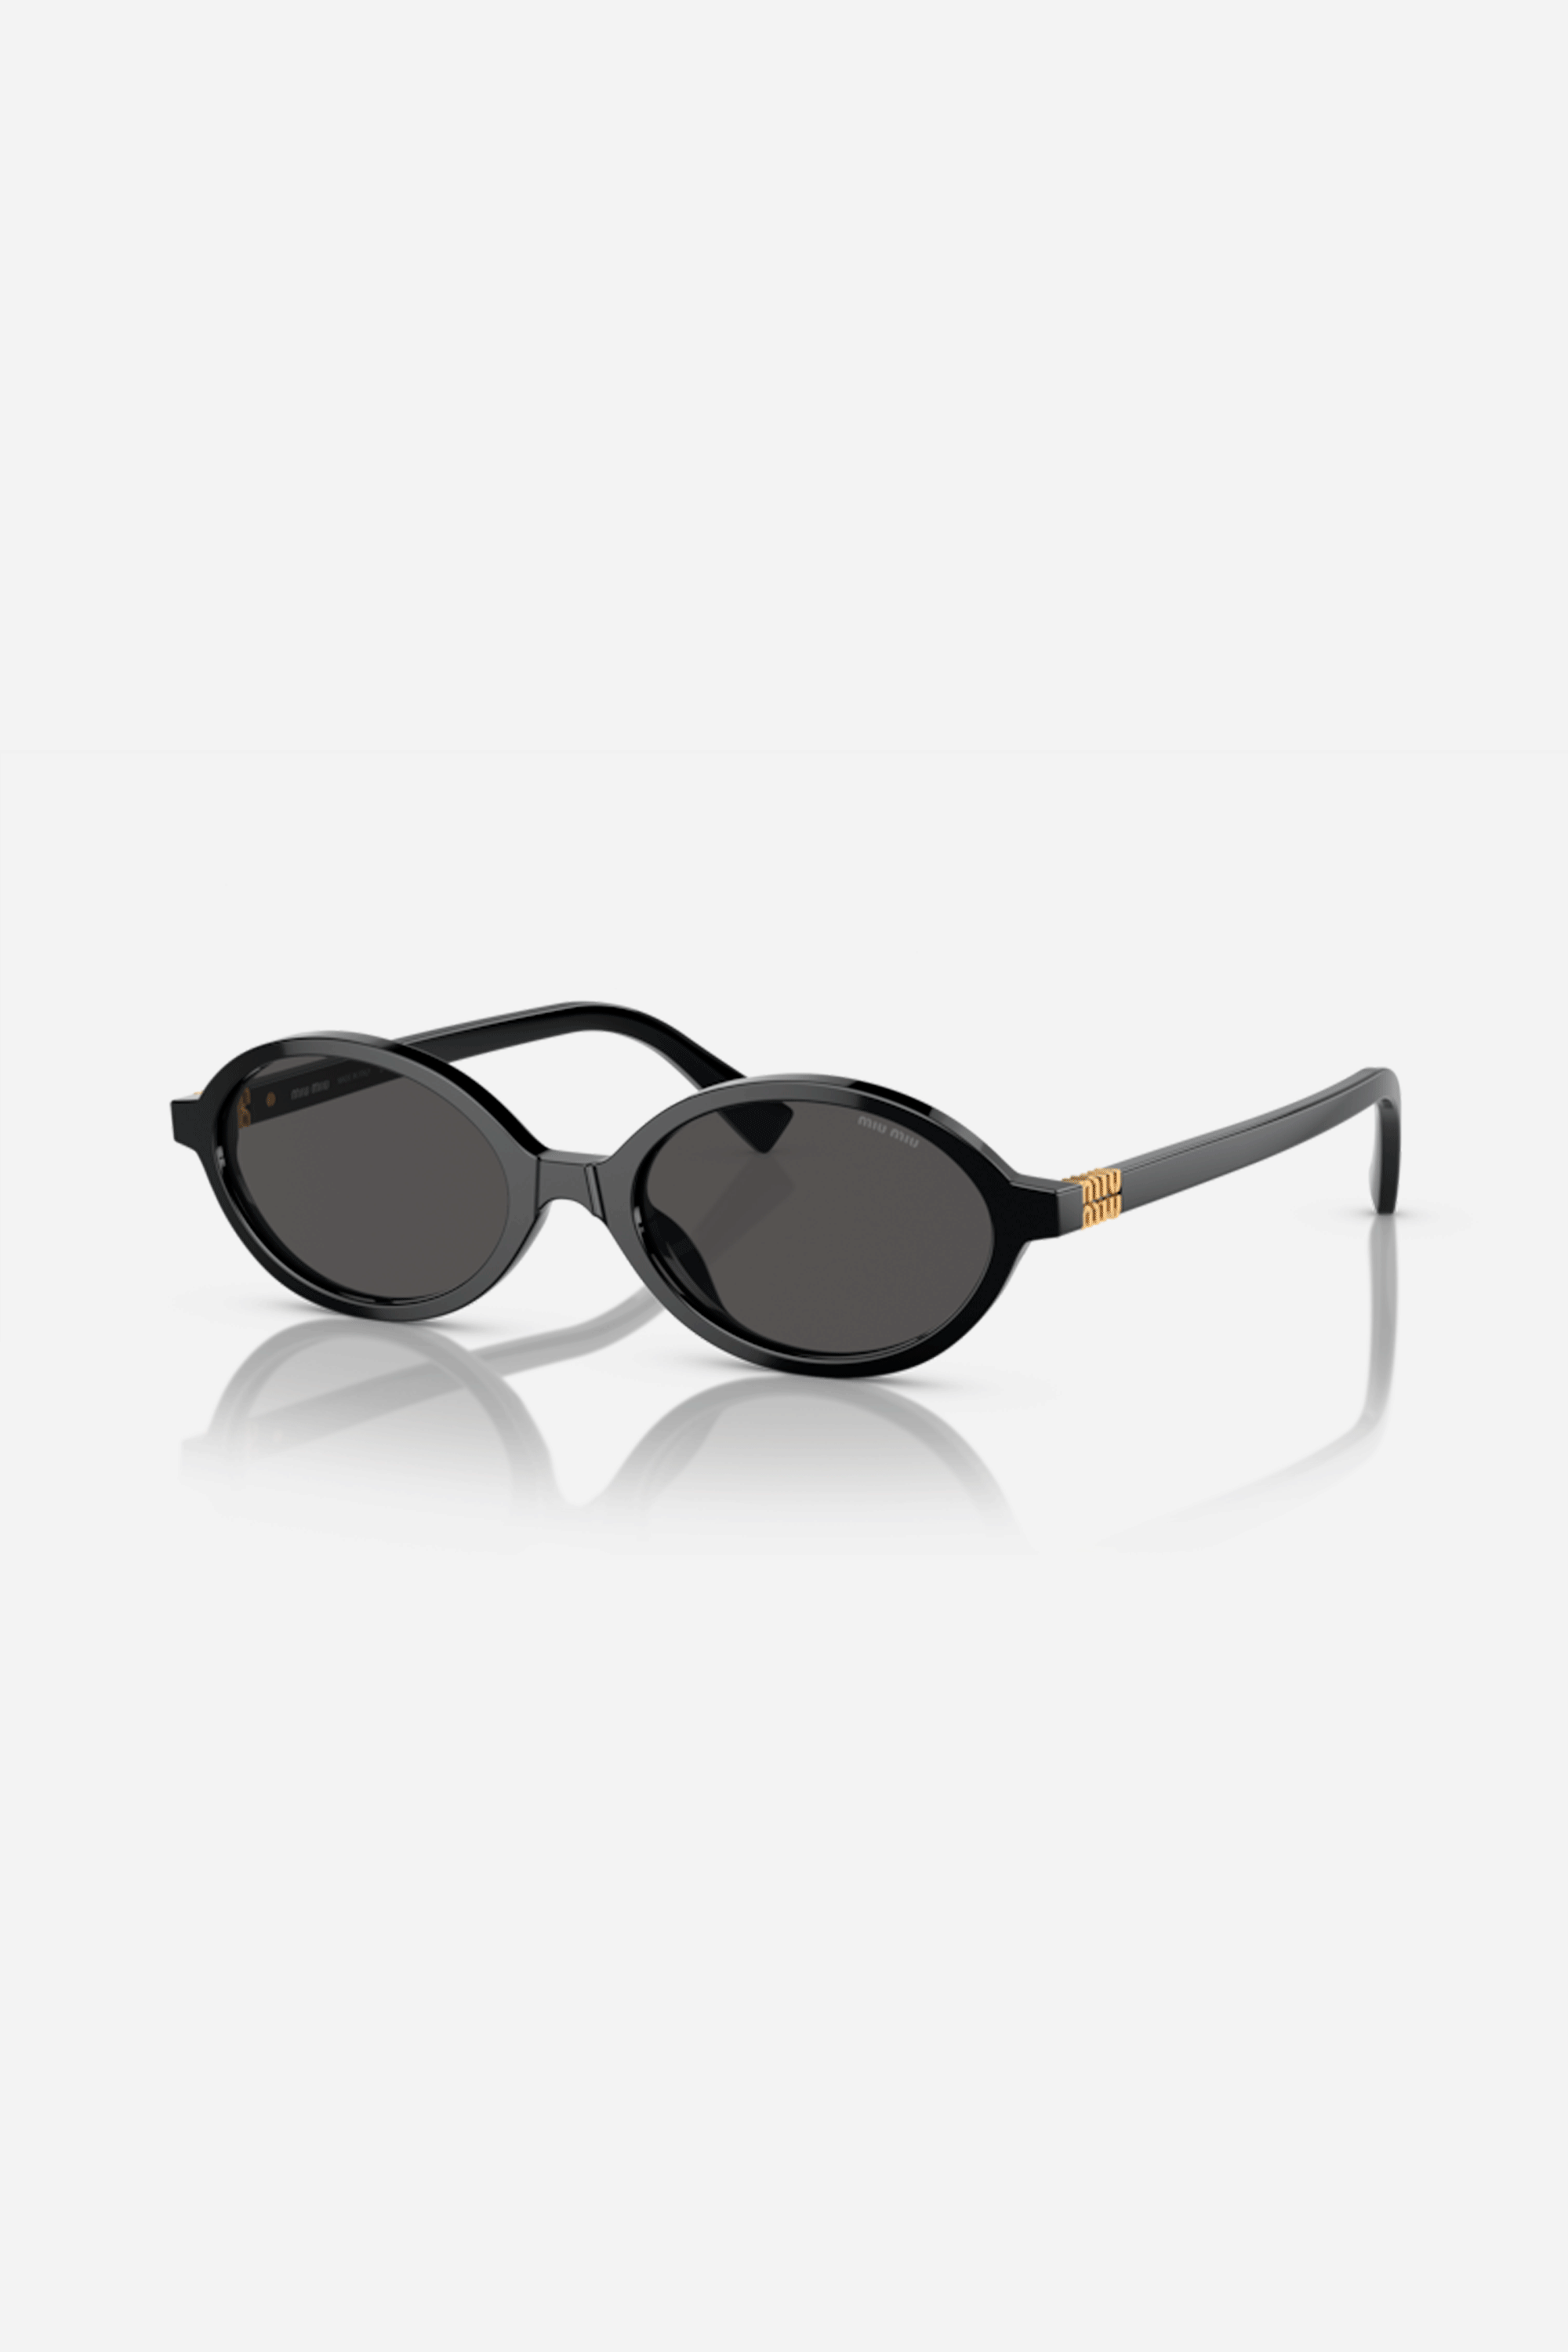 Miu Miu oval acetate black sunglasses - Eyewear Club